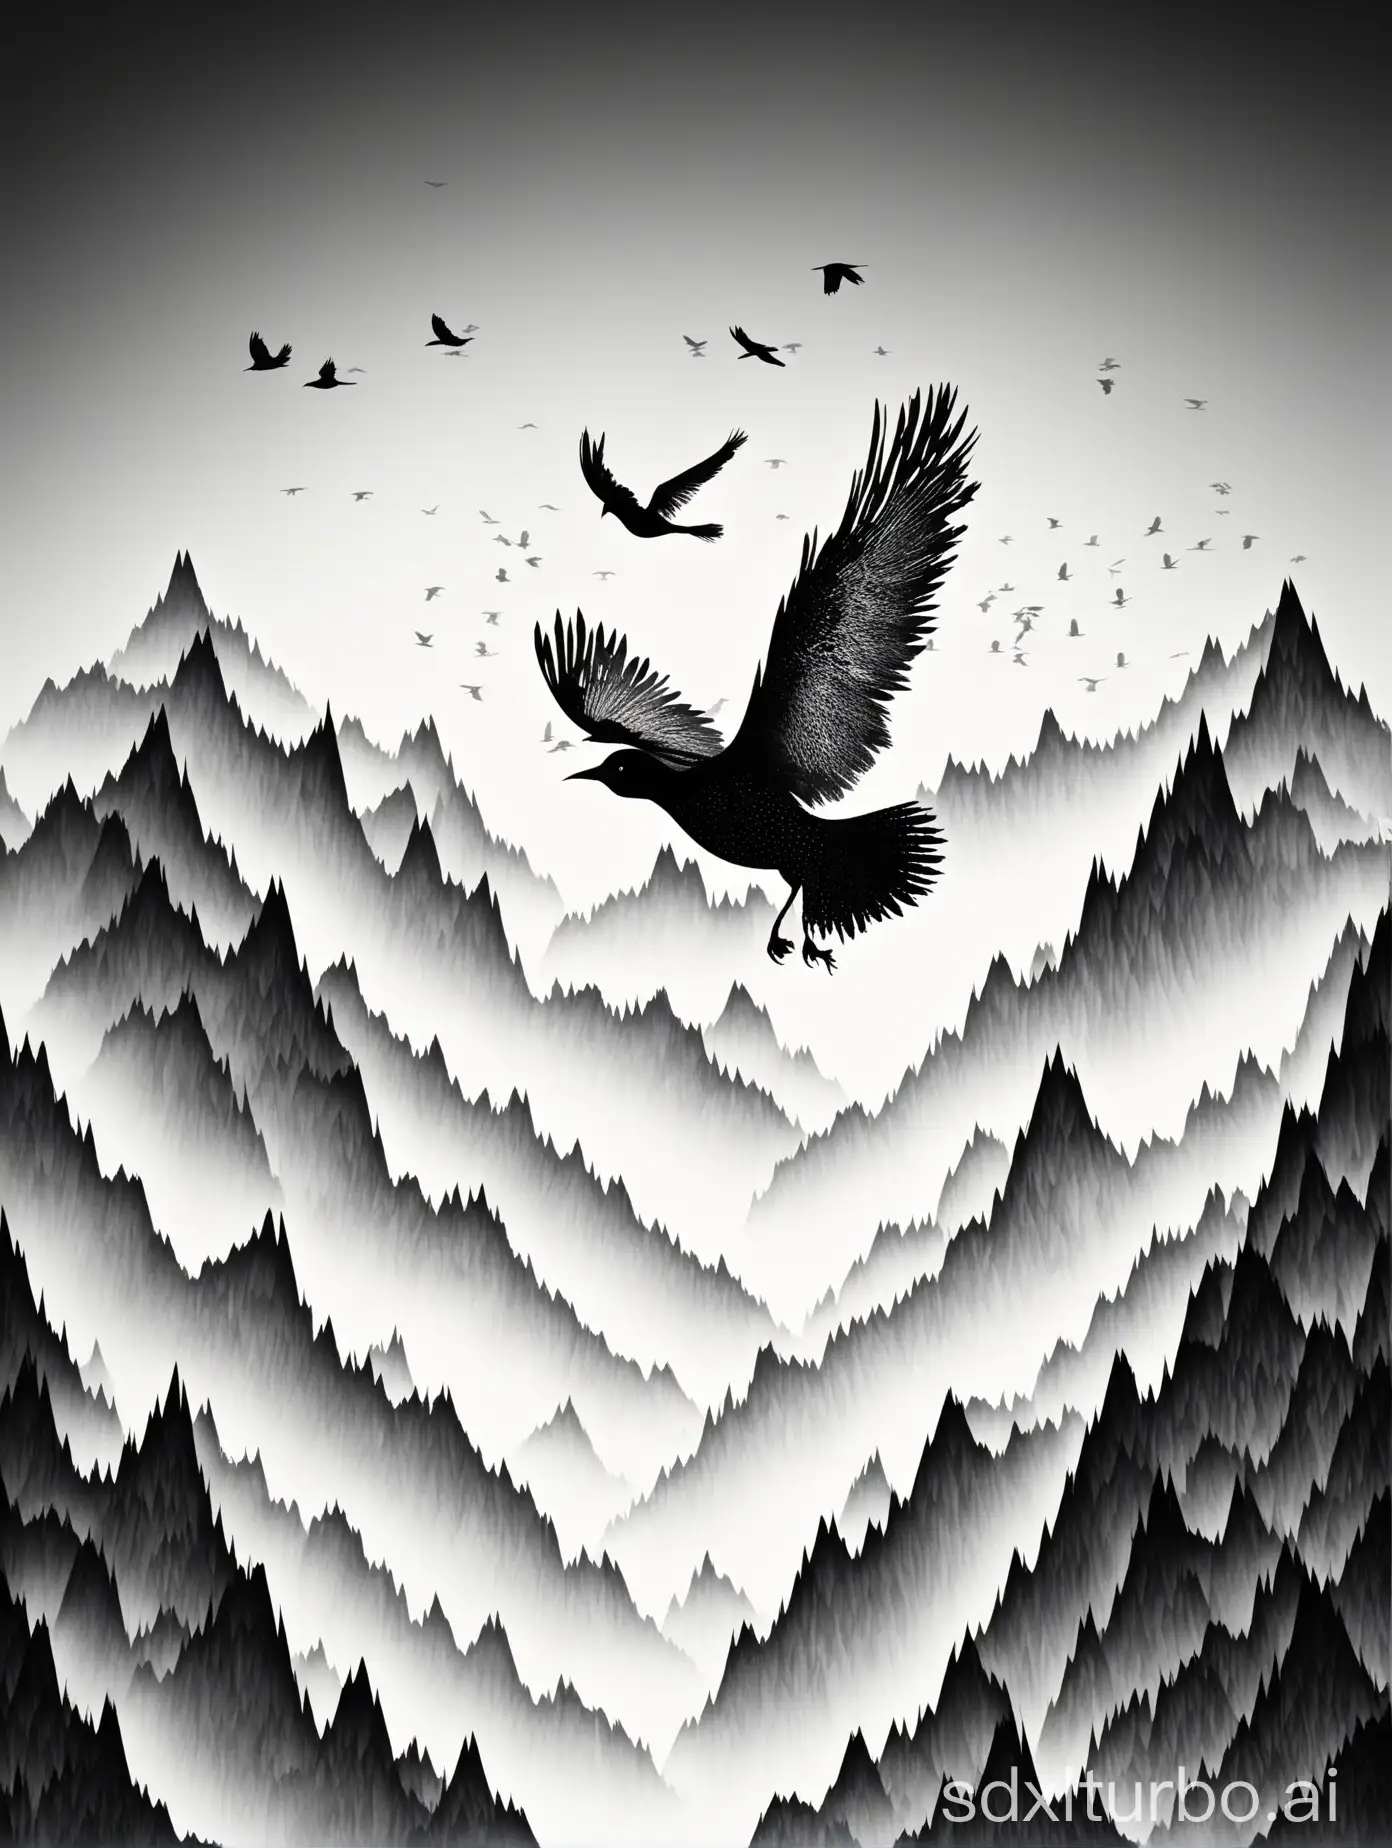 Majestic-Bird-Soaring-Over-Mountain-Landscape-Artwork